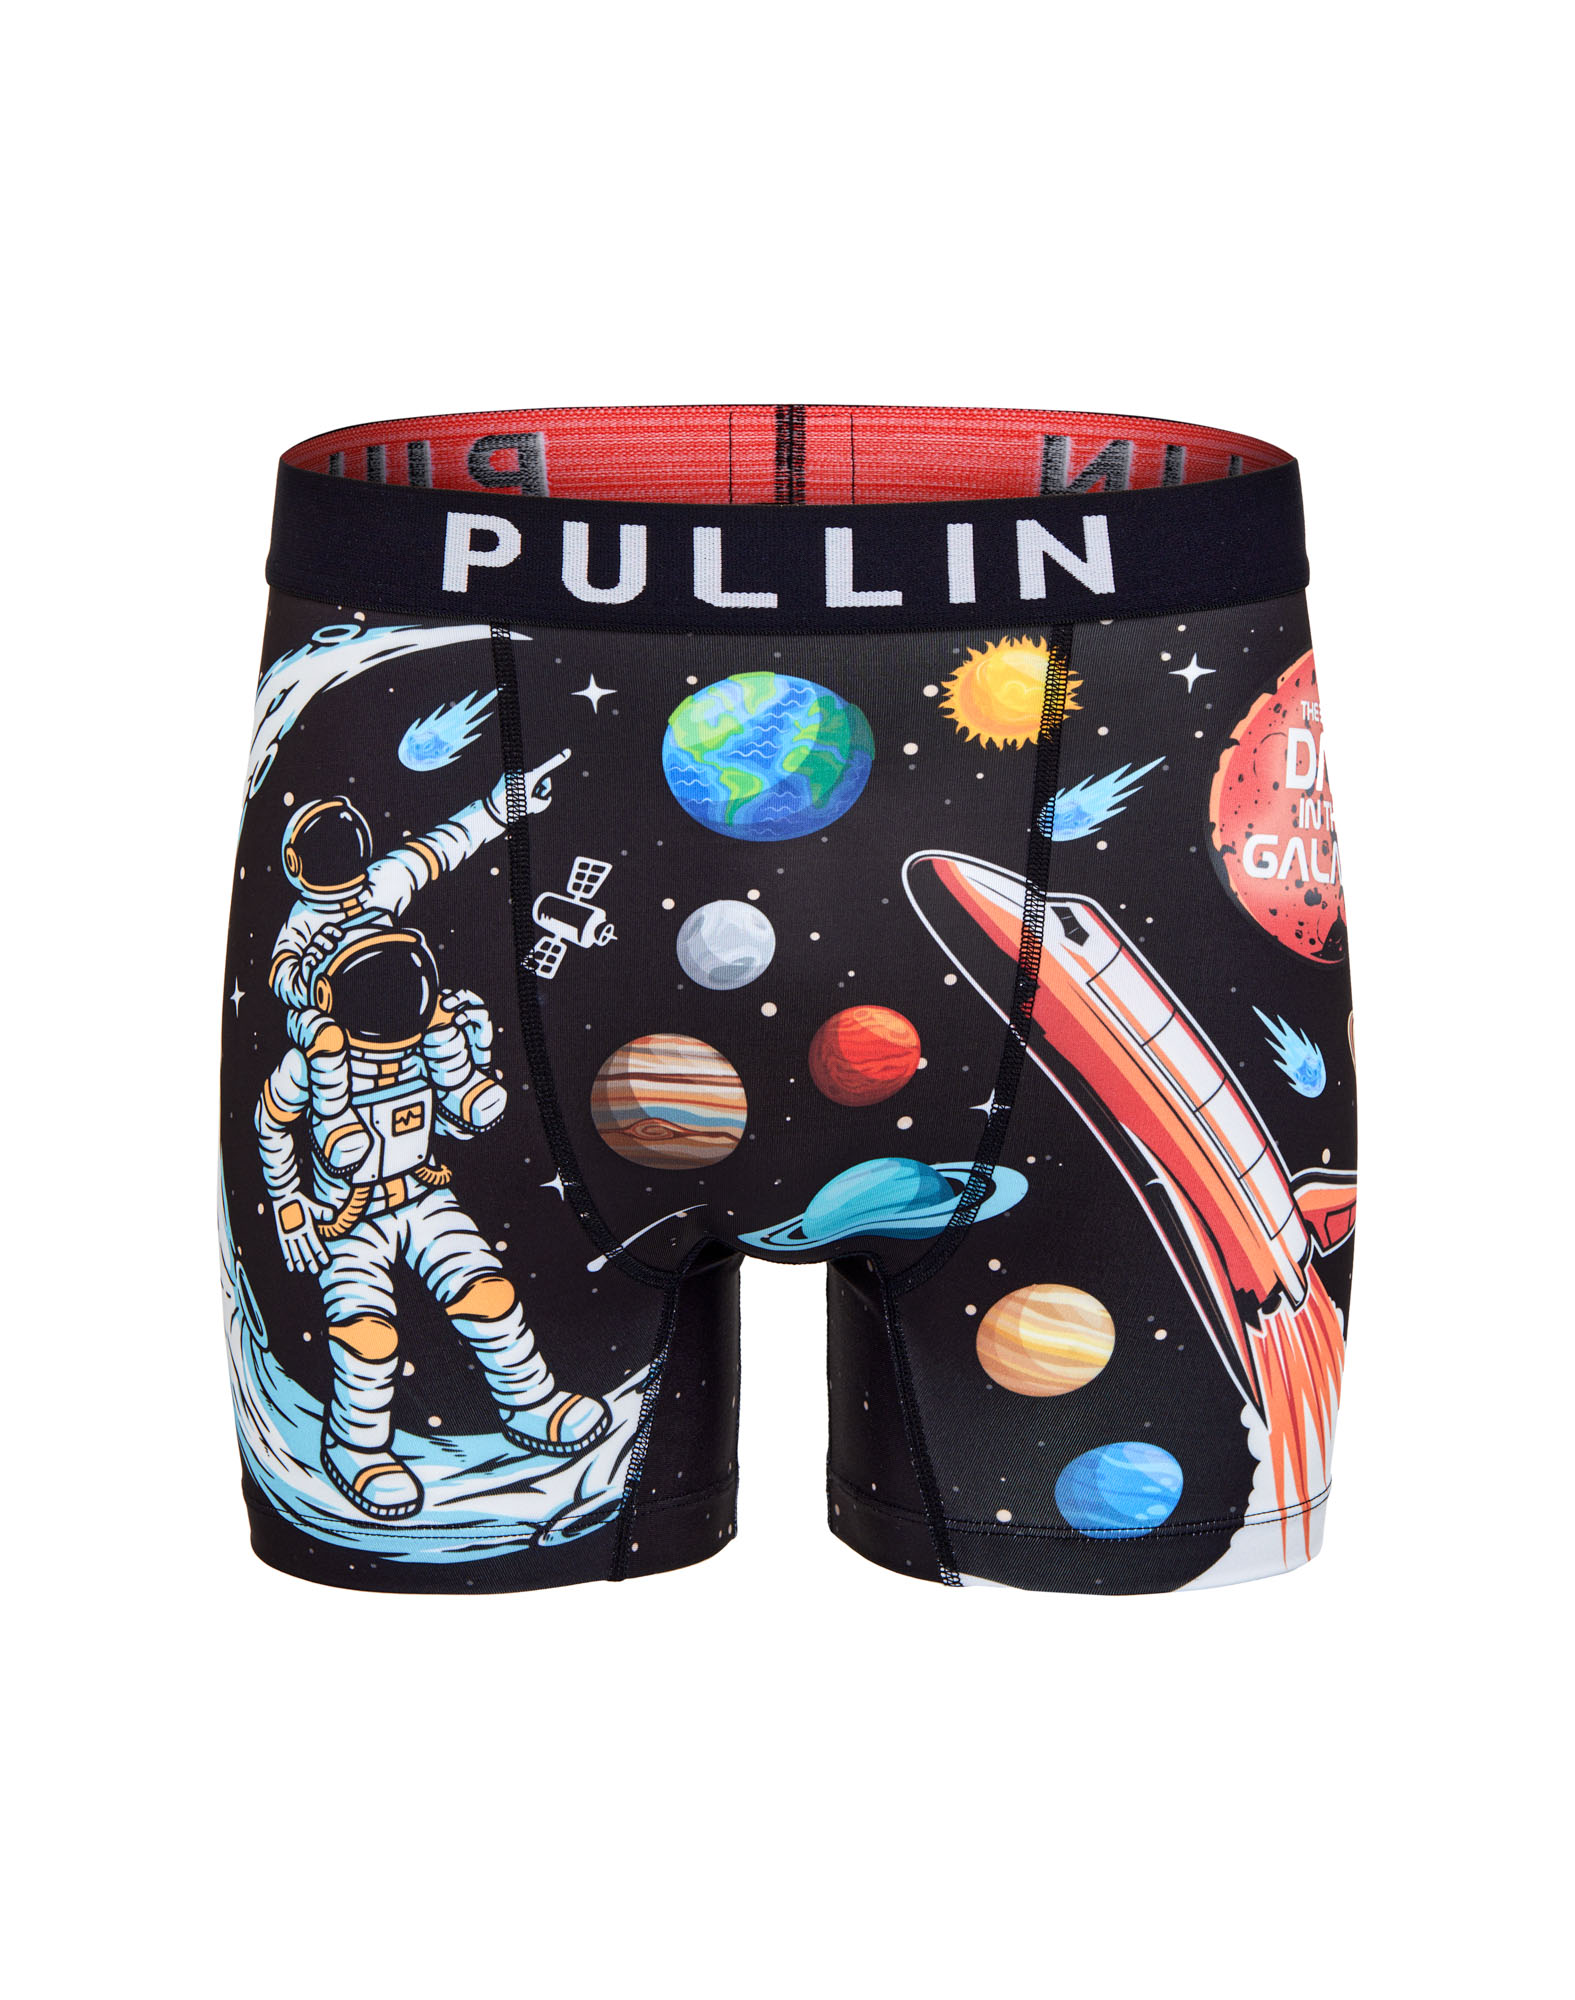 PULLIN Boxer underwear homme FA2 Baam Fashion PULL-IN